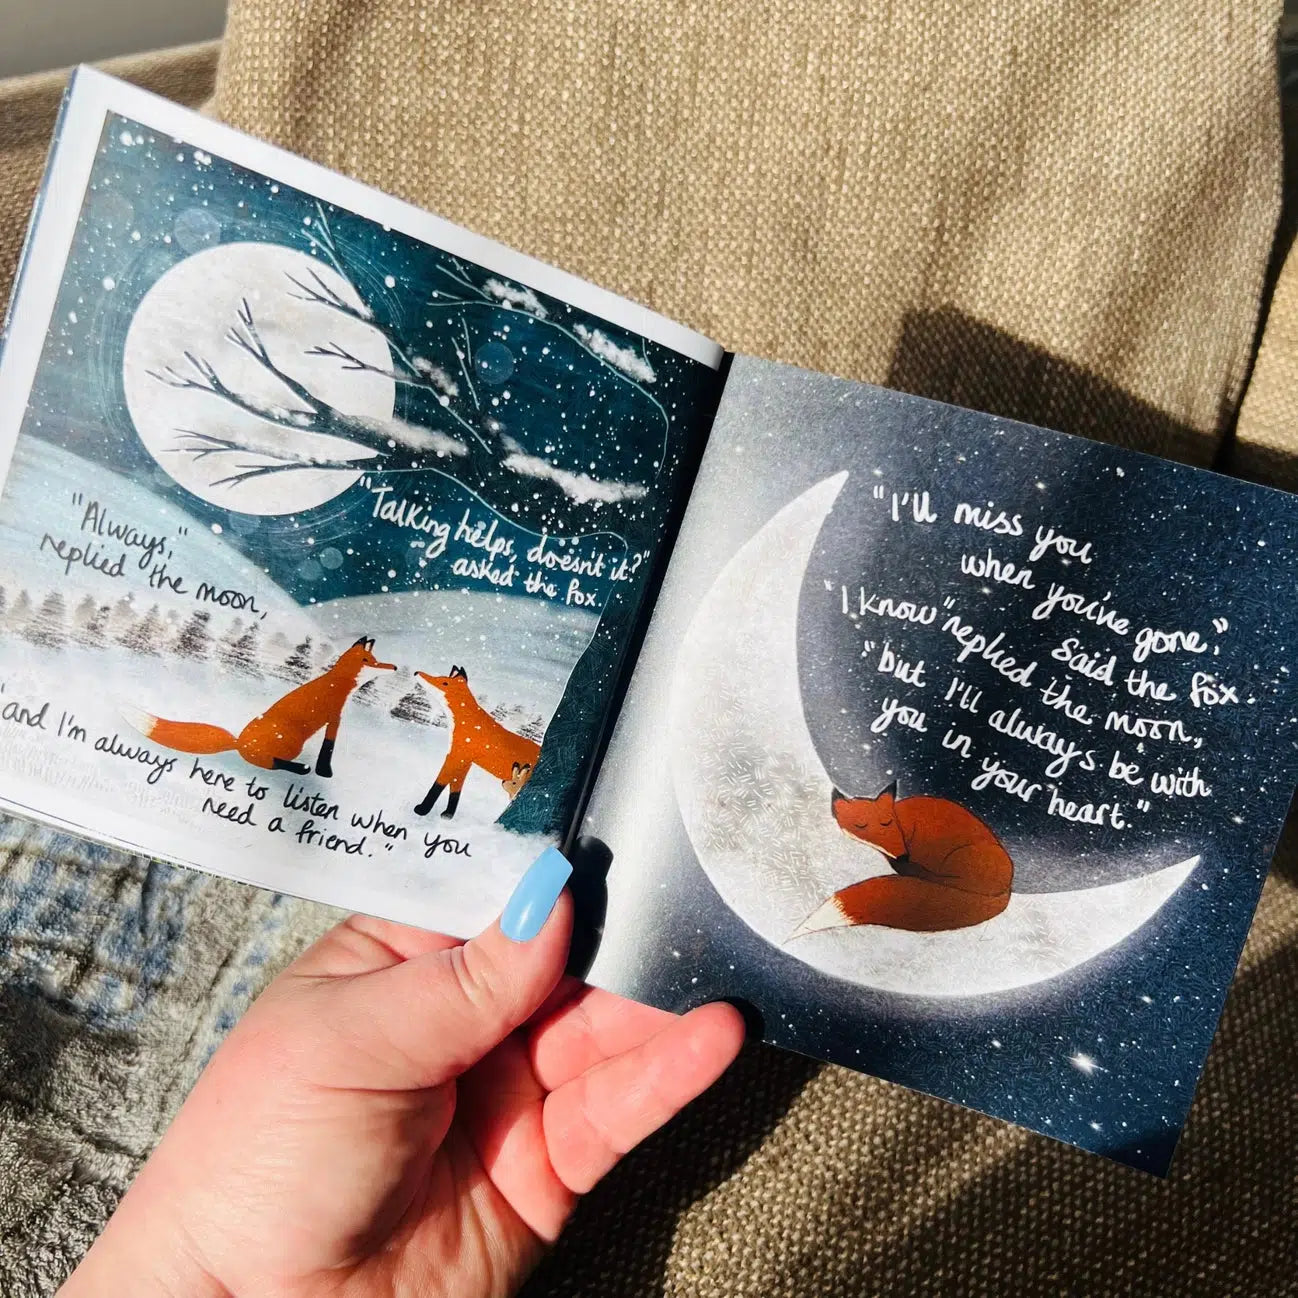 Fox Under The Moon 'A Hug in a Book' Mini Book-Breda's Gift Shop